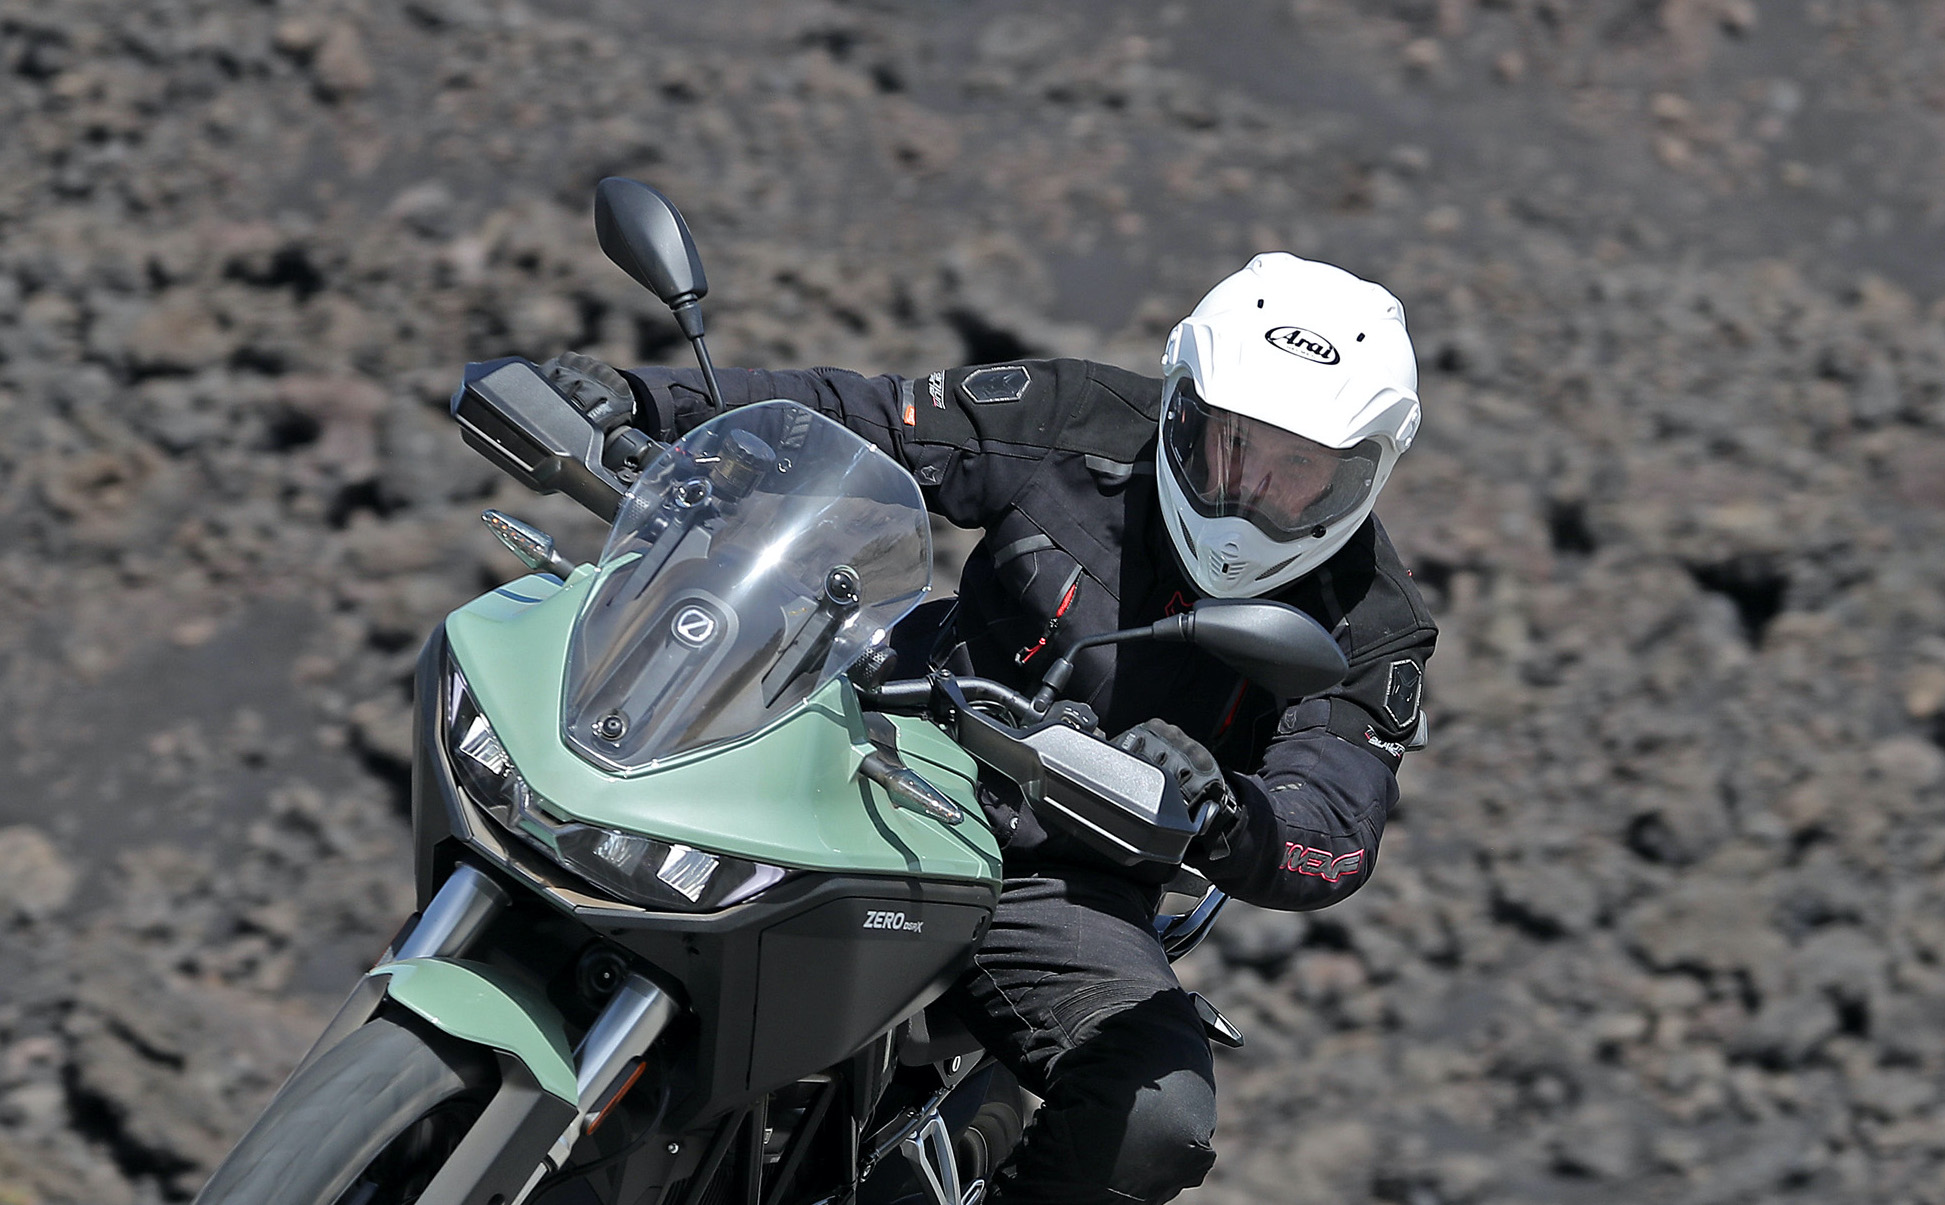 Arai Tour X4 motorcycle helmet review